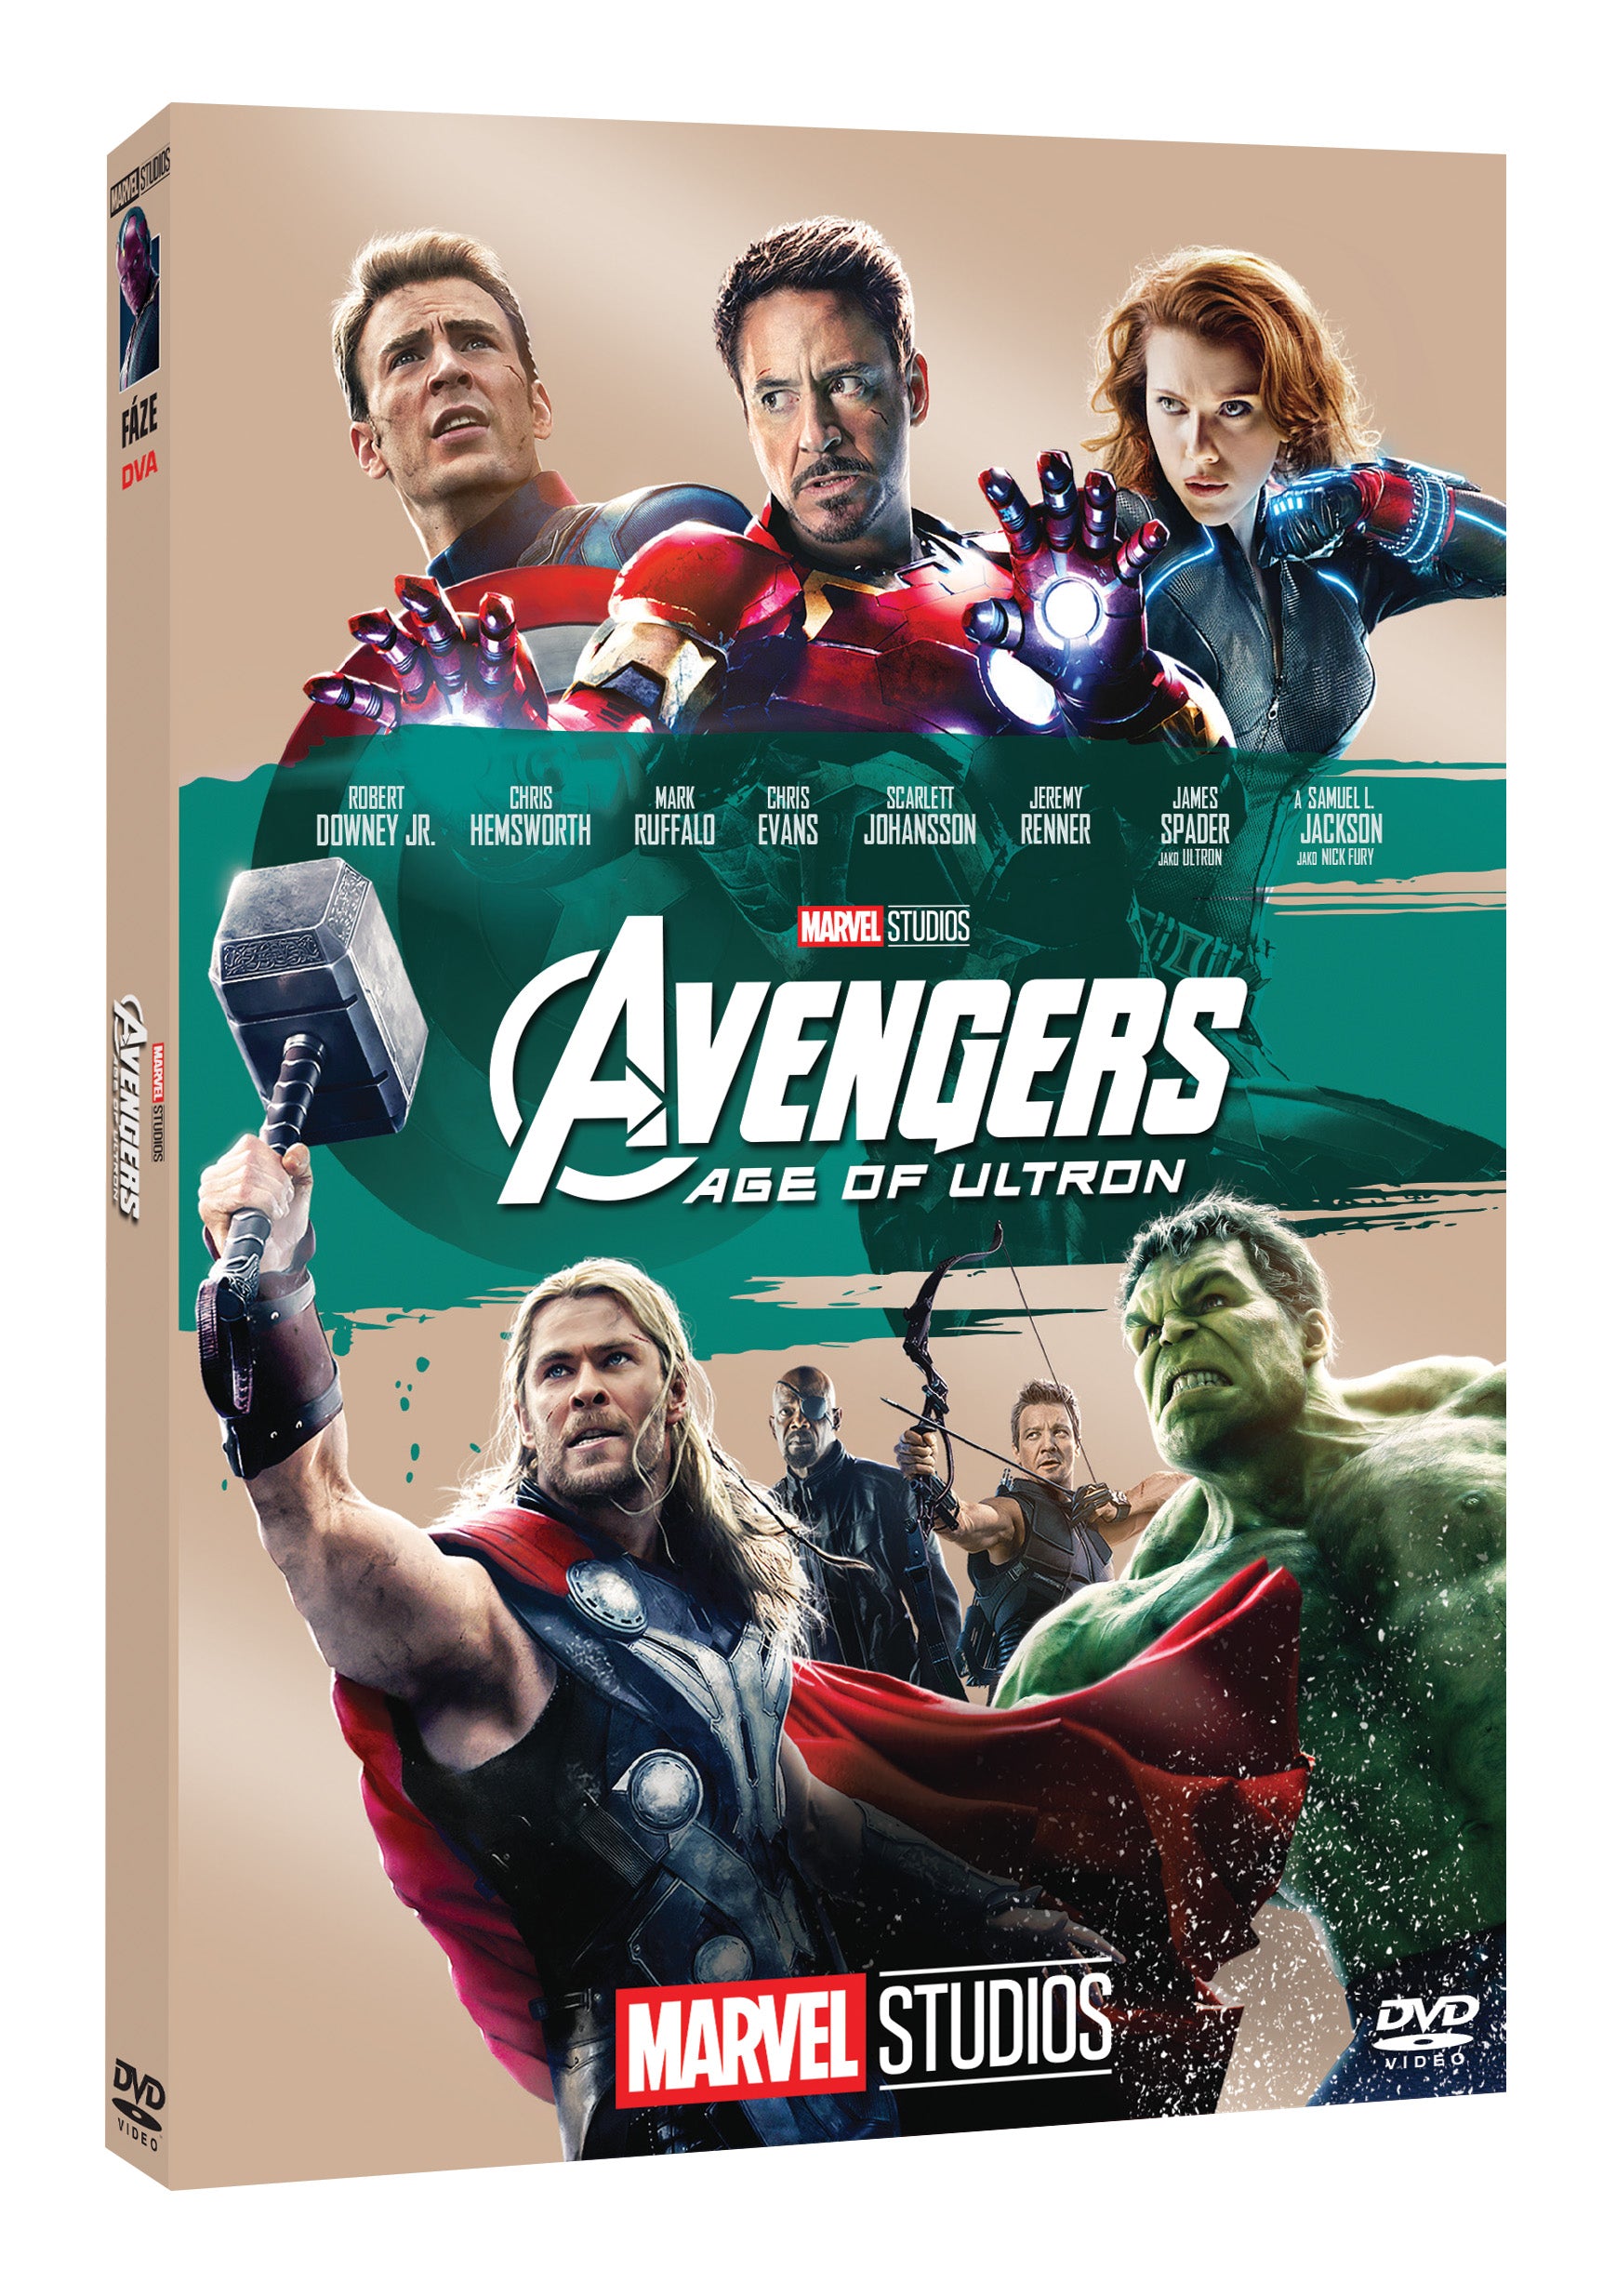 Avengers: Age of Ultron DVD - Edice Marvel 10 let / Avengers: Age of Ultron